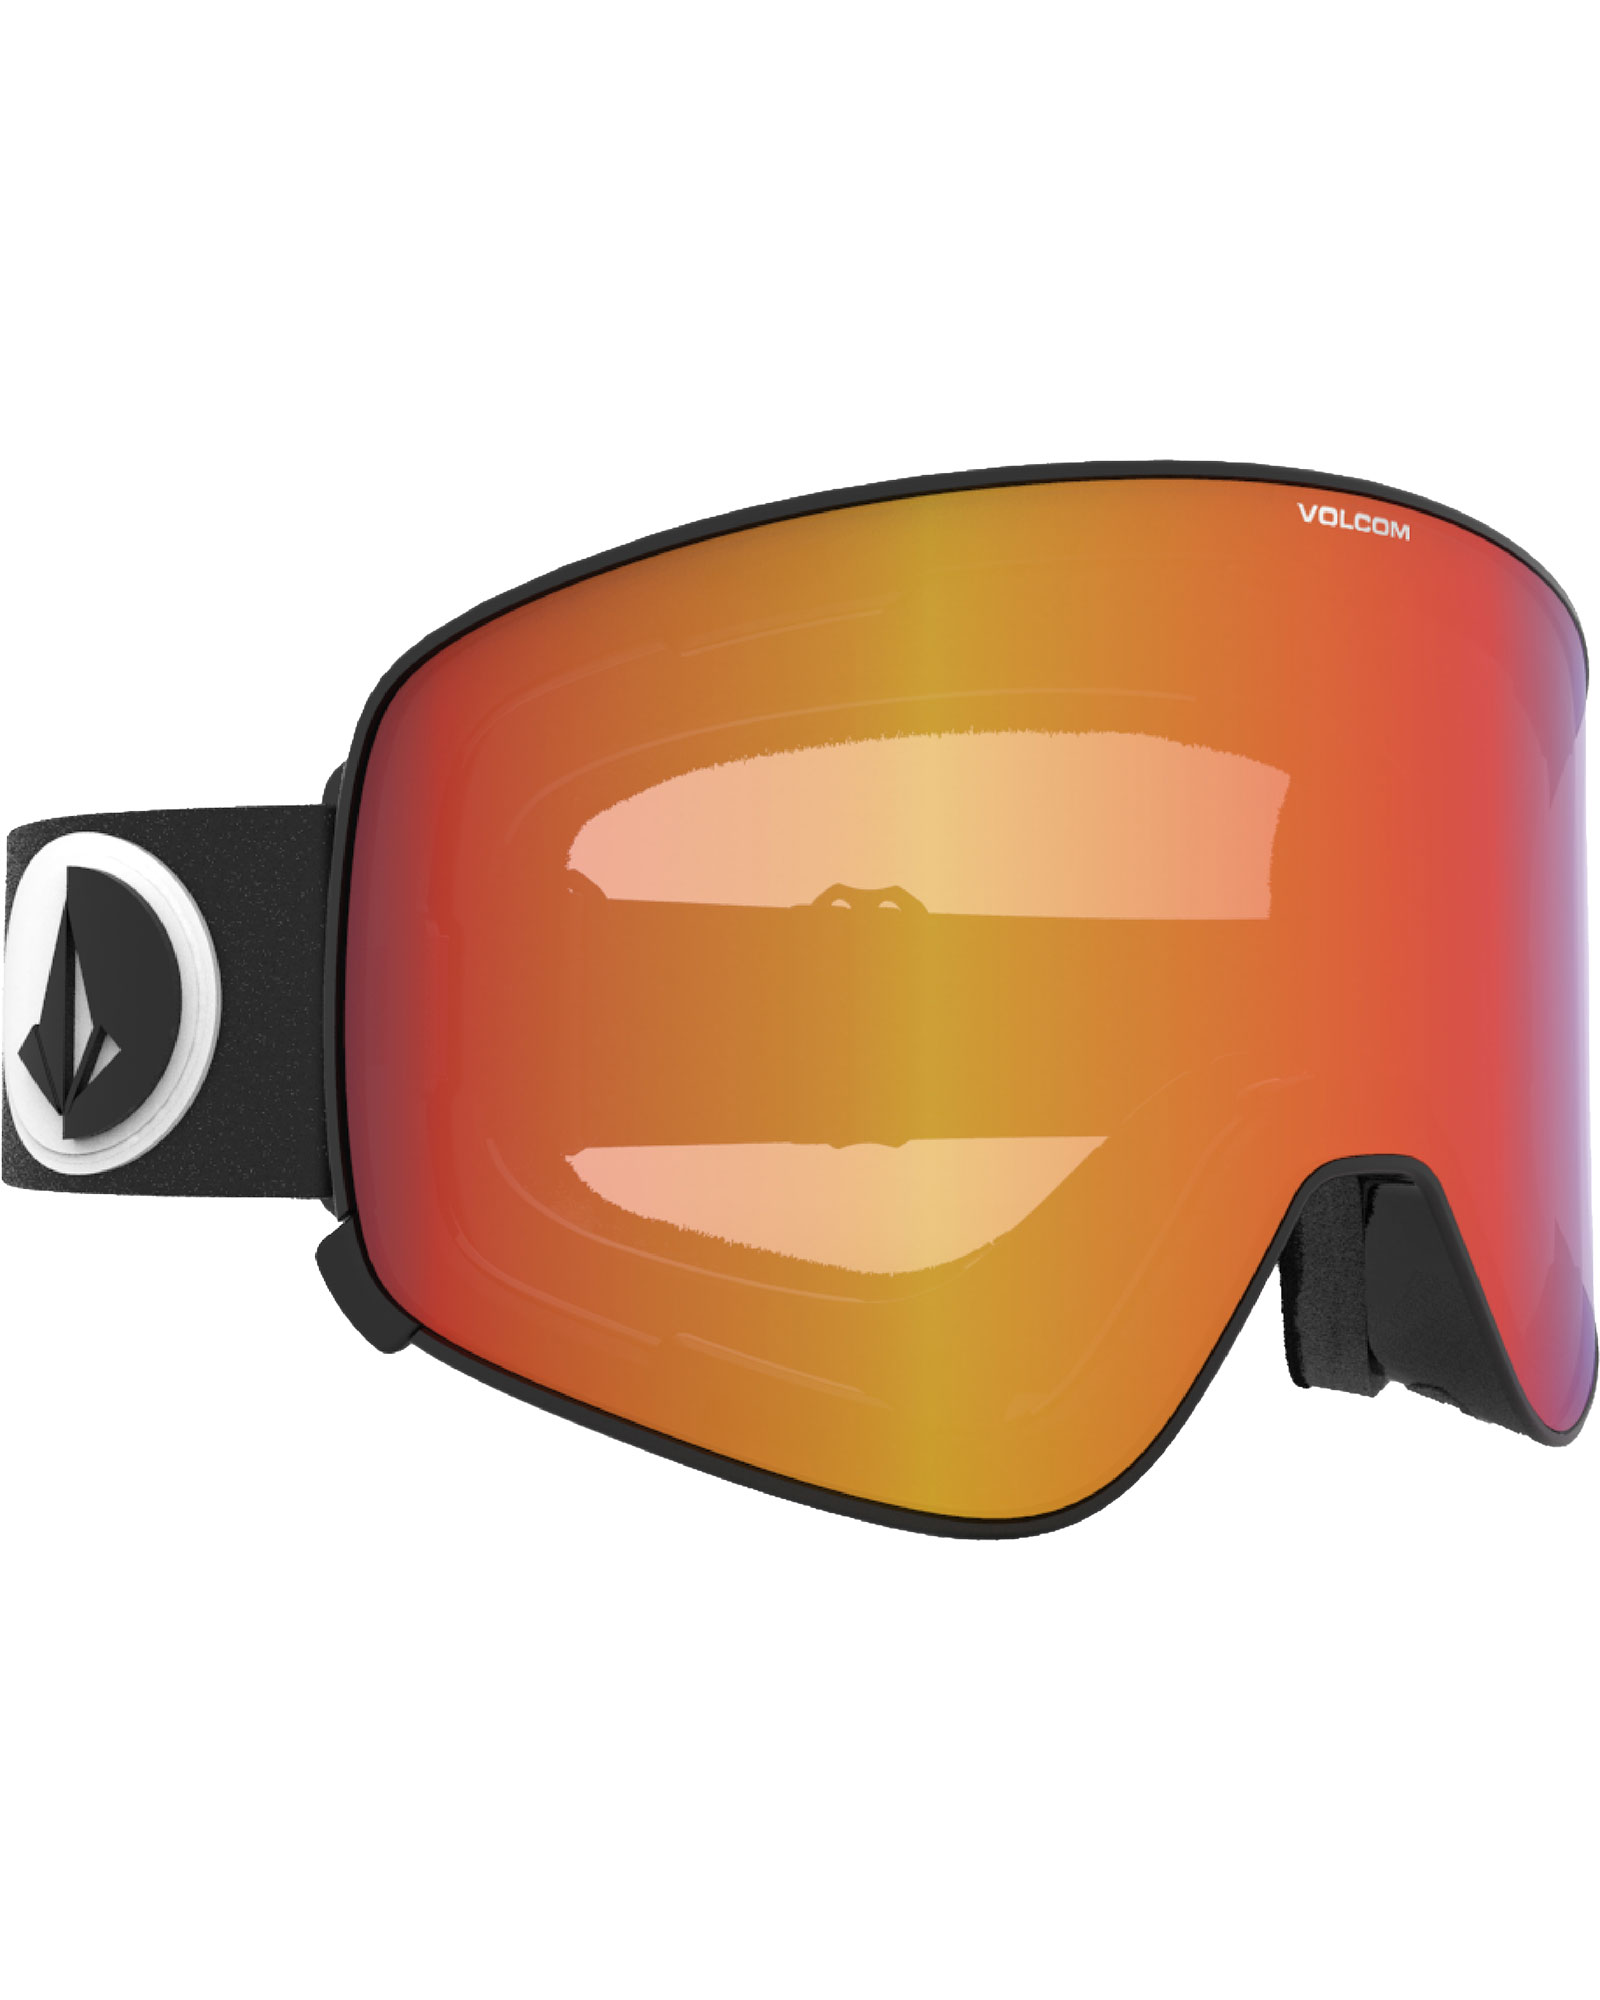 Volcom Odyssey Gloss Black / Red Chrome + Yellow Goggles - Gloss Black